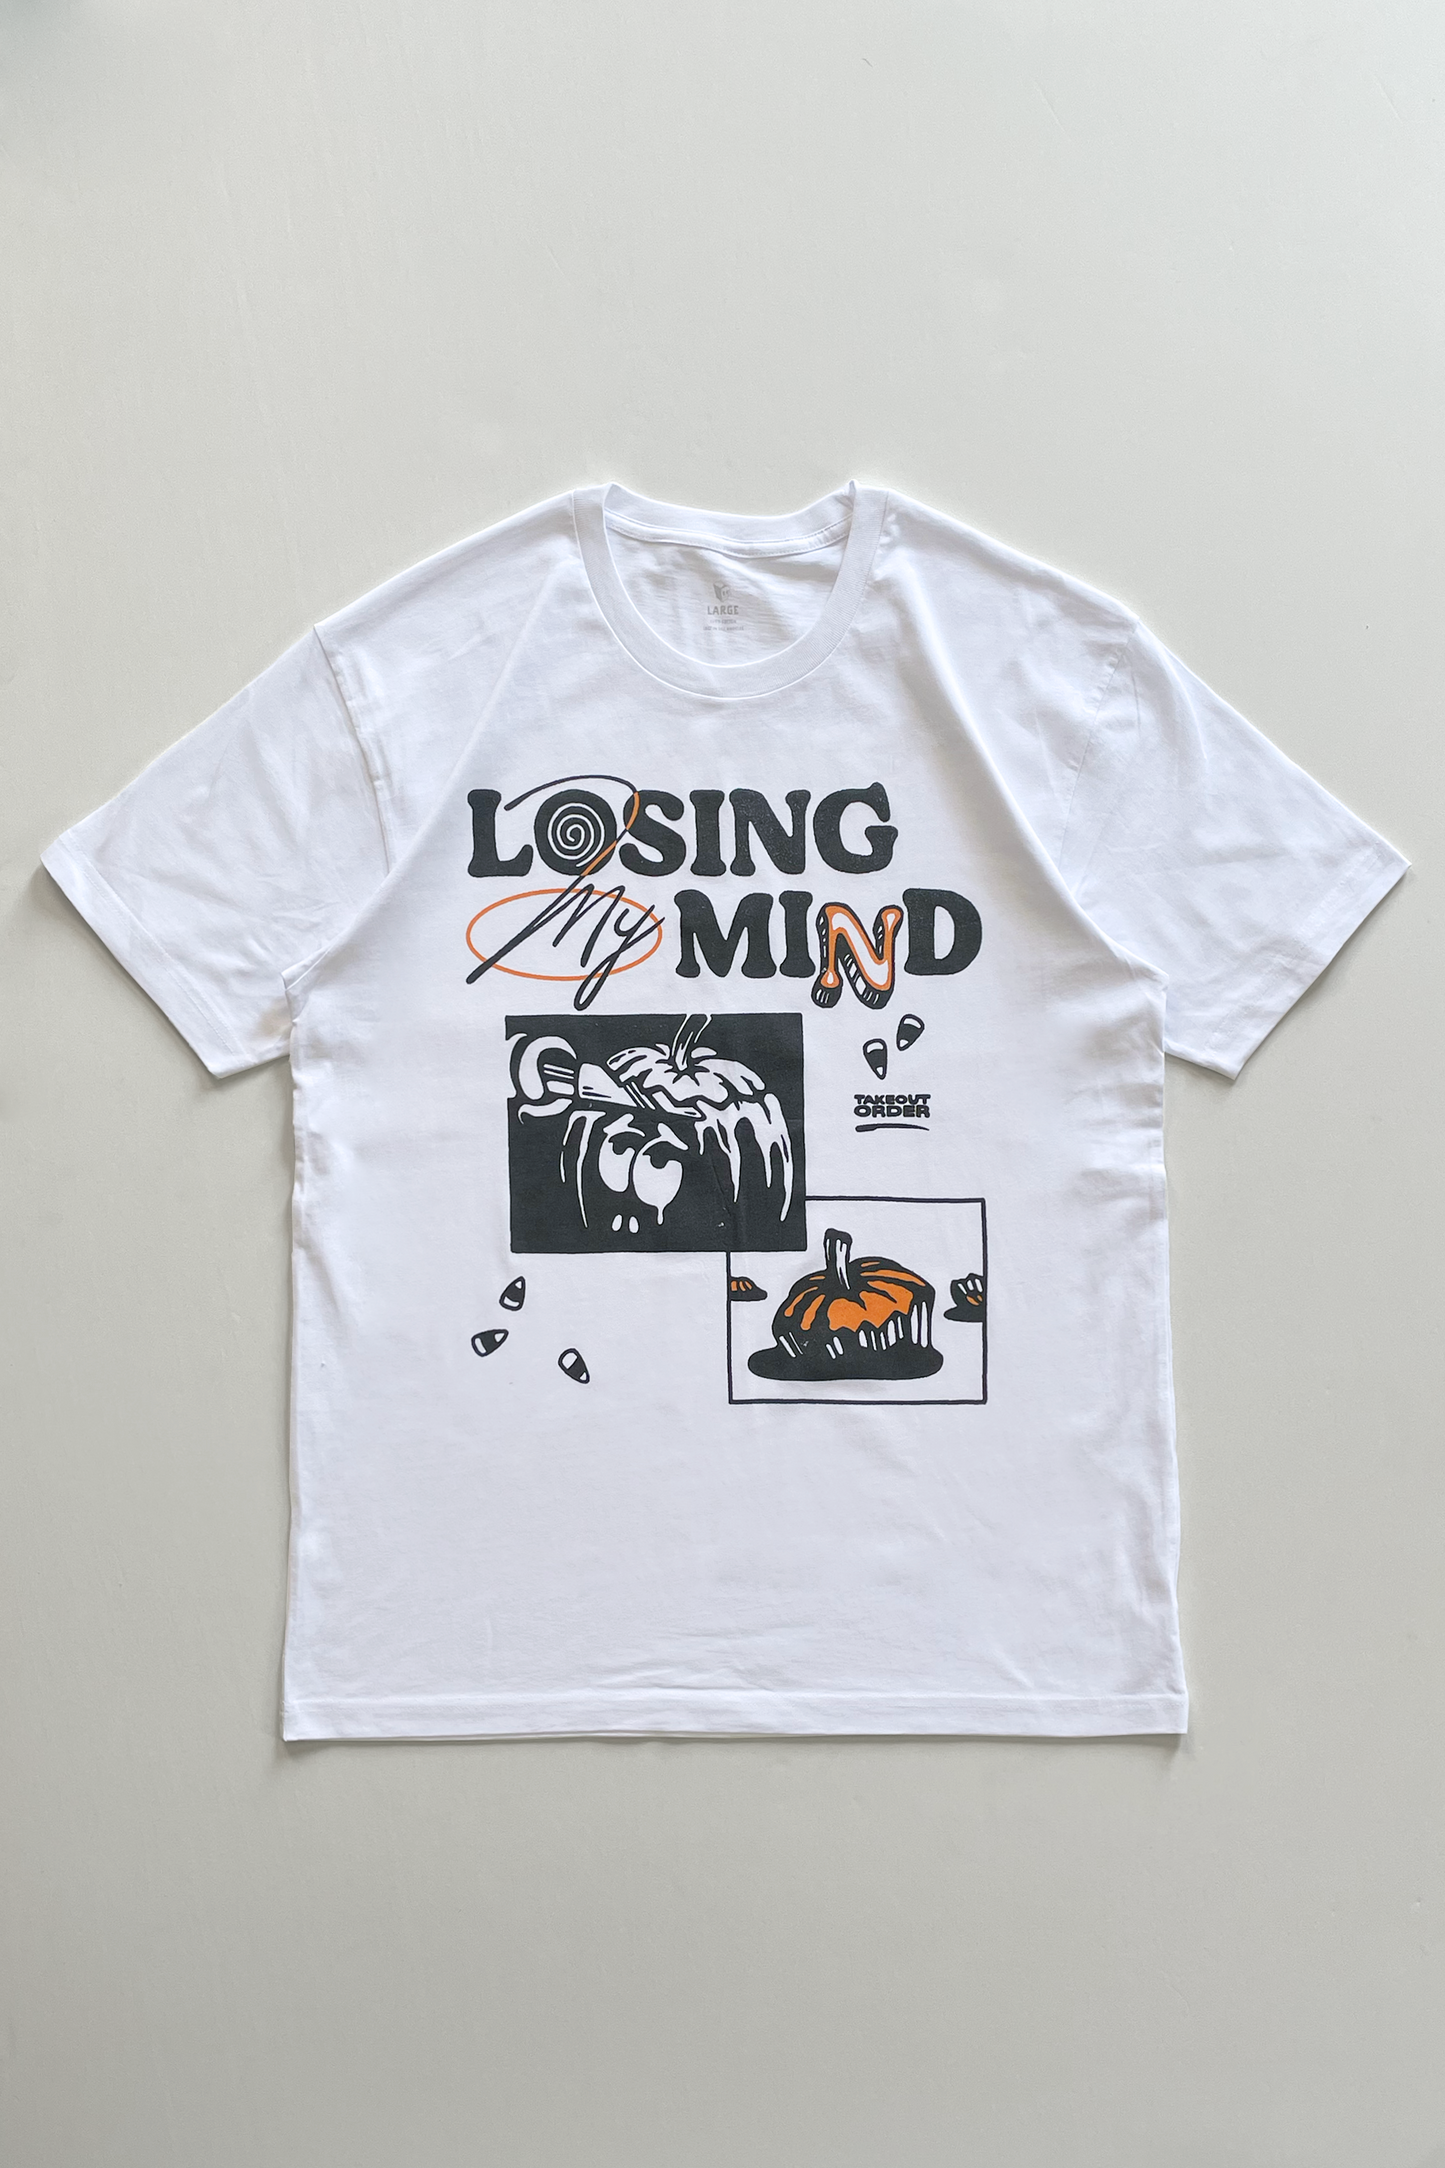 Losing My Mind T-shirt